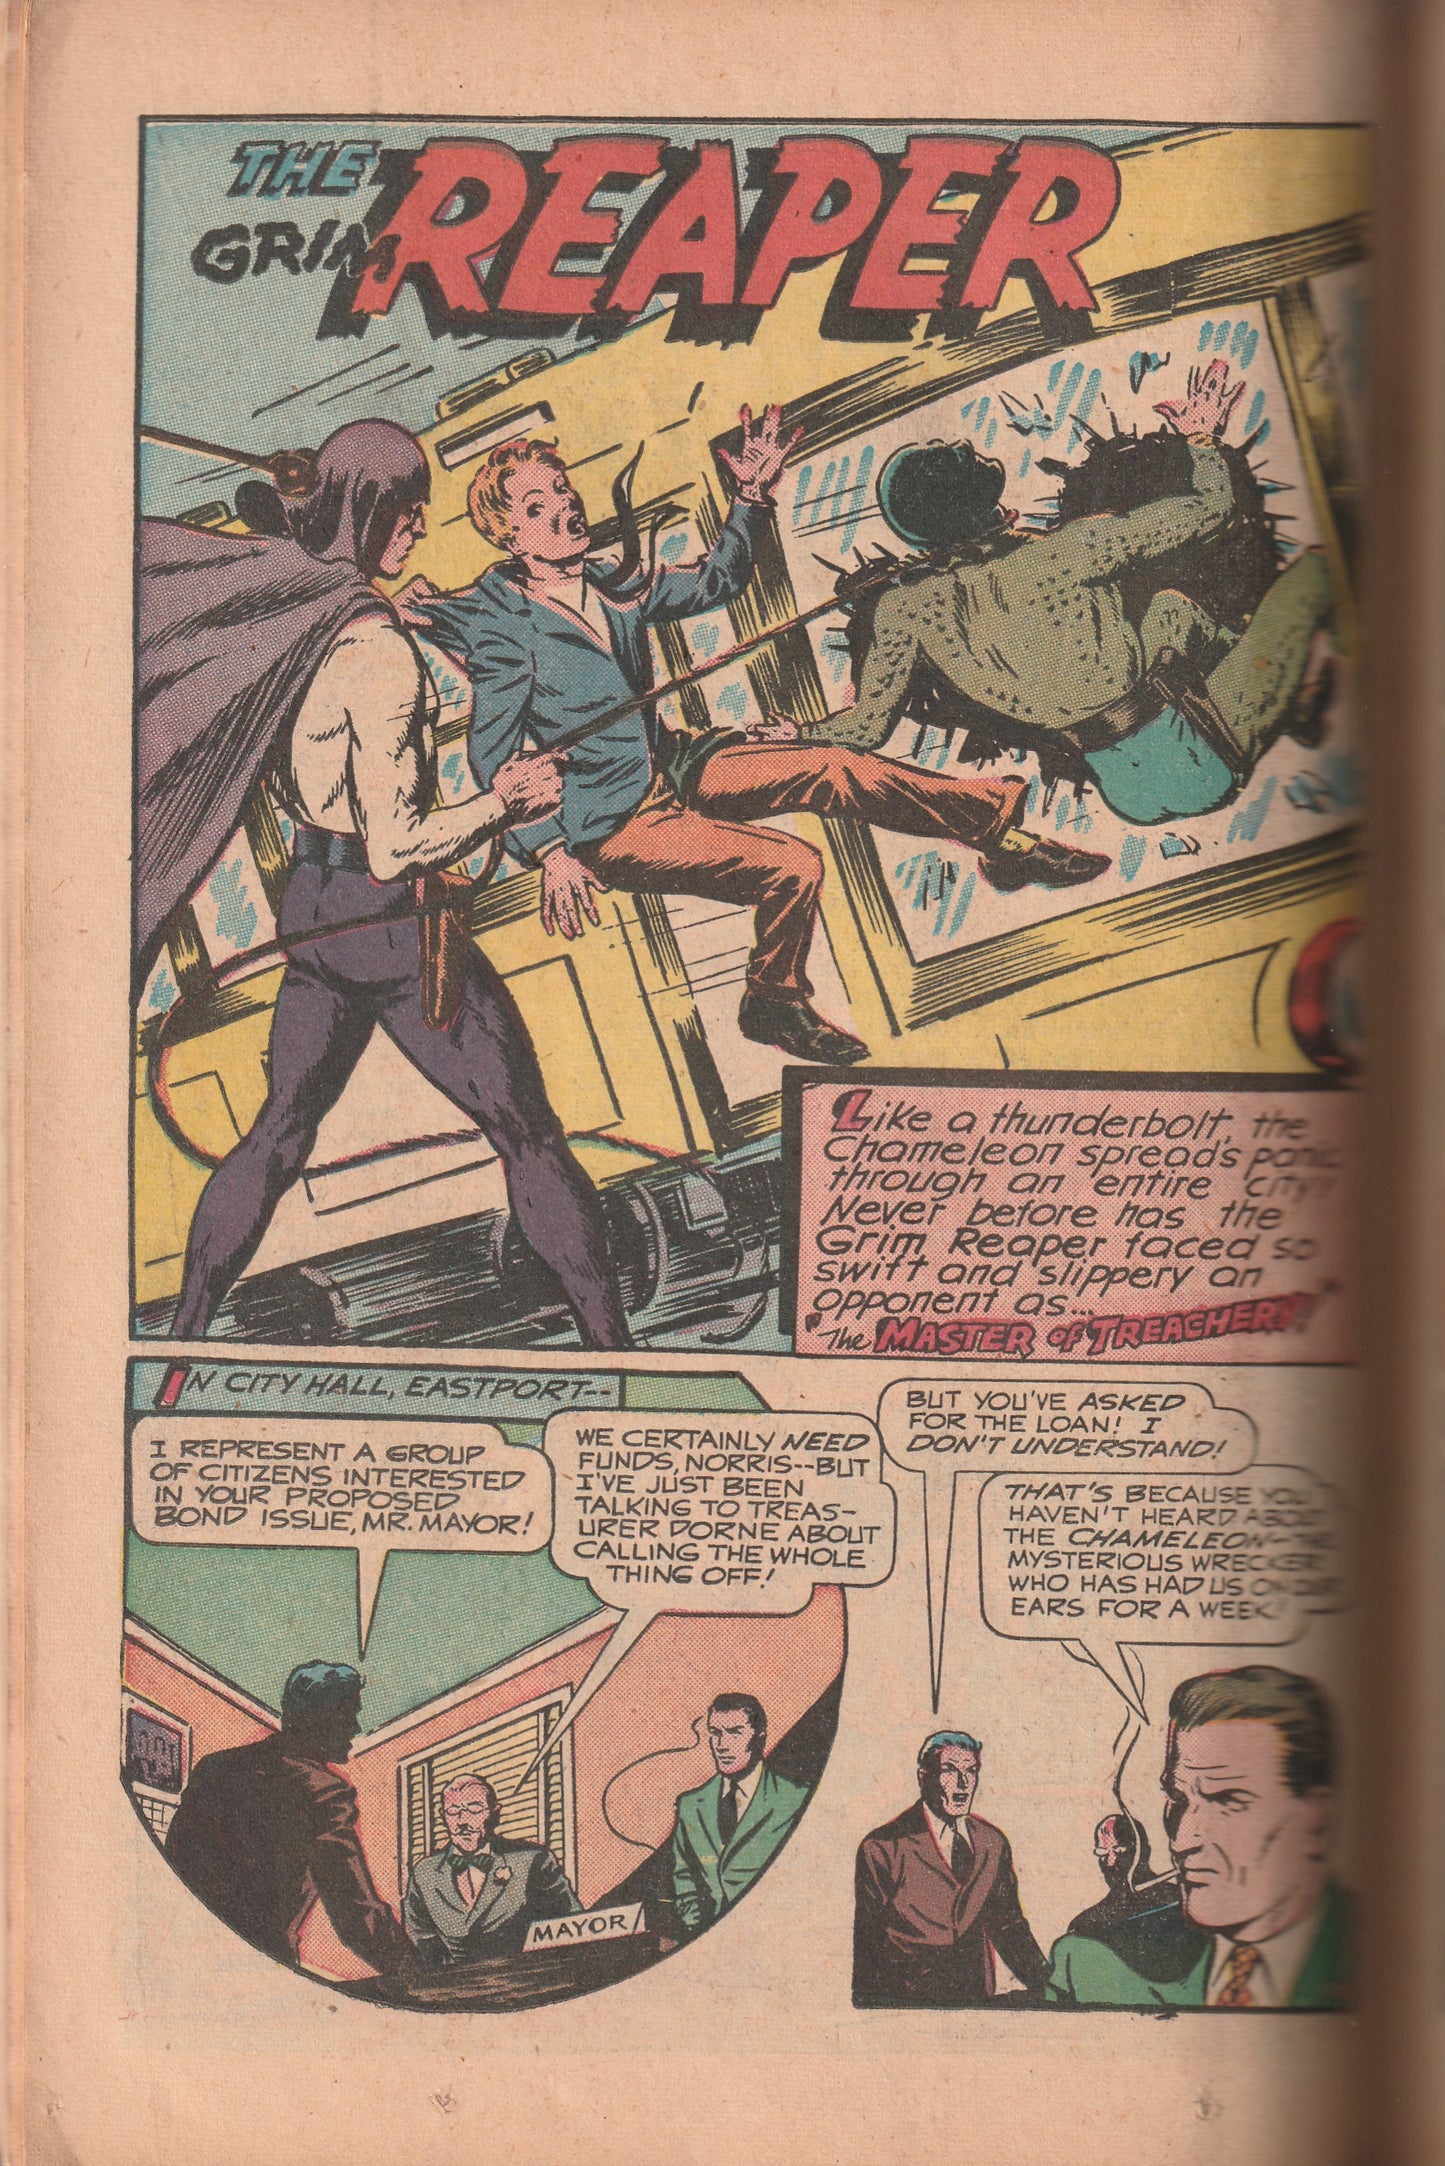 Wonder Comics #16 (1947) - Alex Schomburg (Xela) cover, Spectro appearance